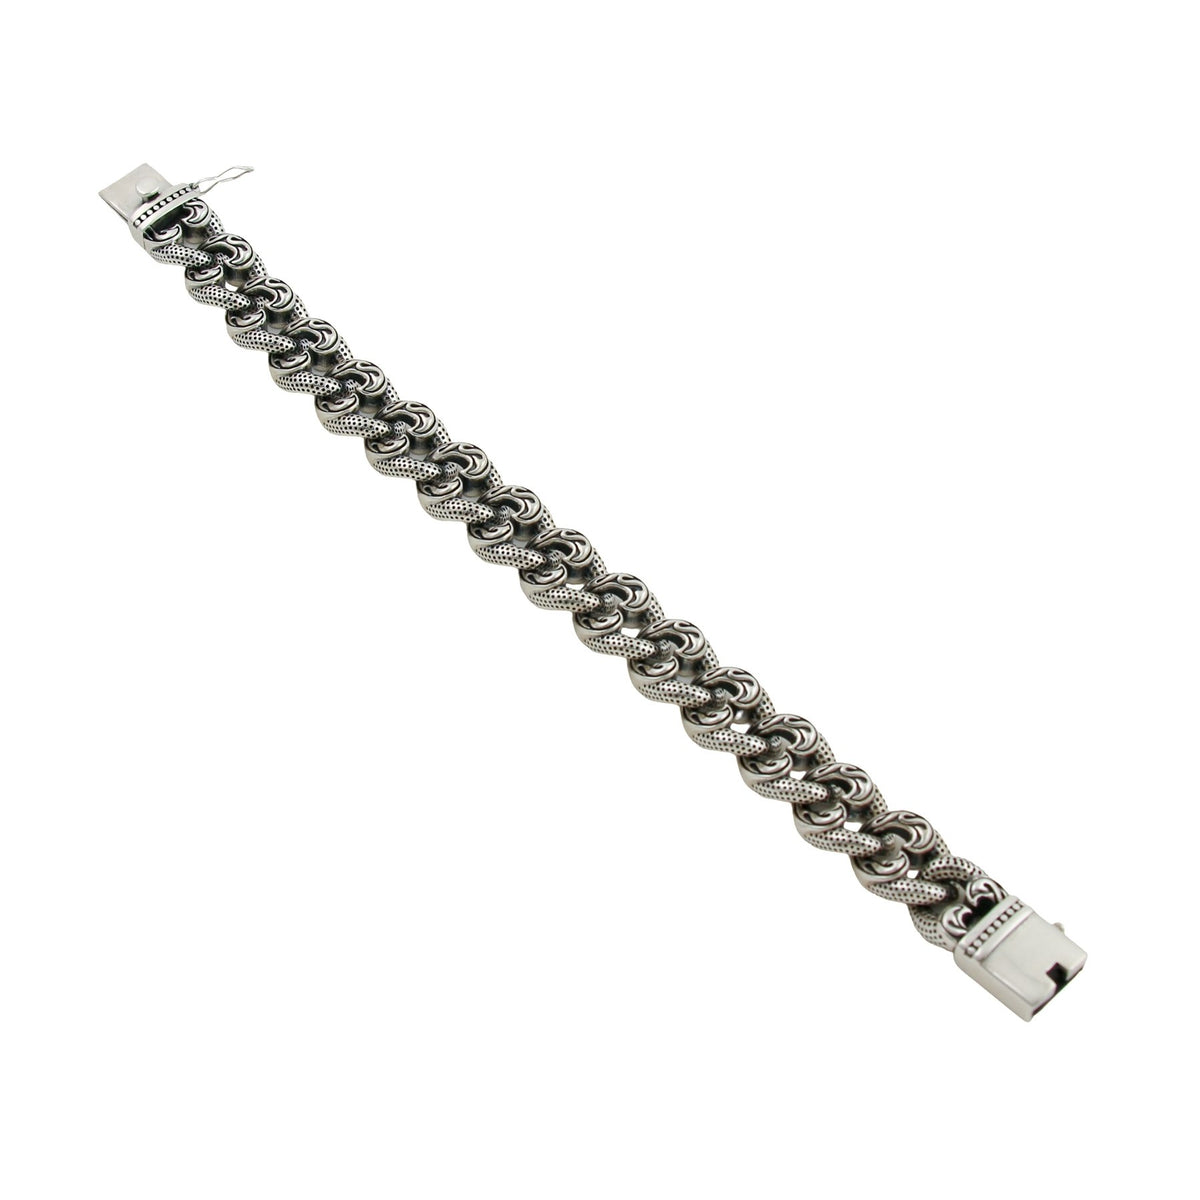 Heart Shaped Curb Chain Bracelet - Kingdom Jewelry